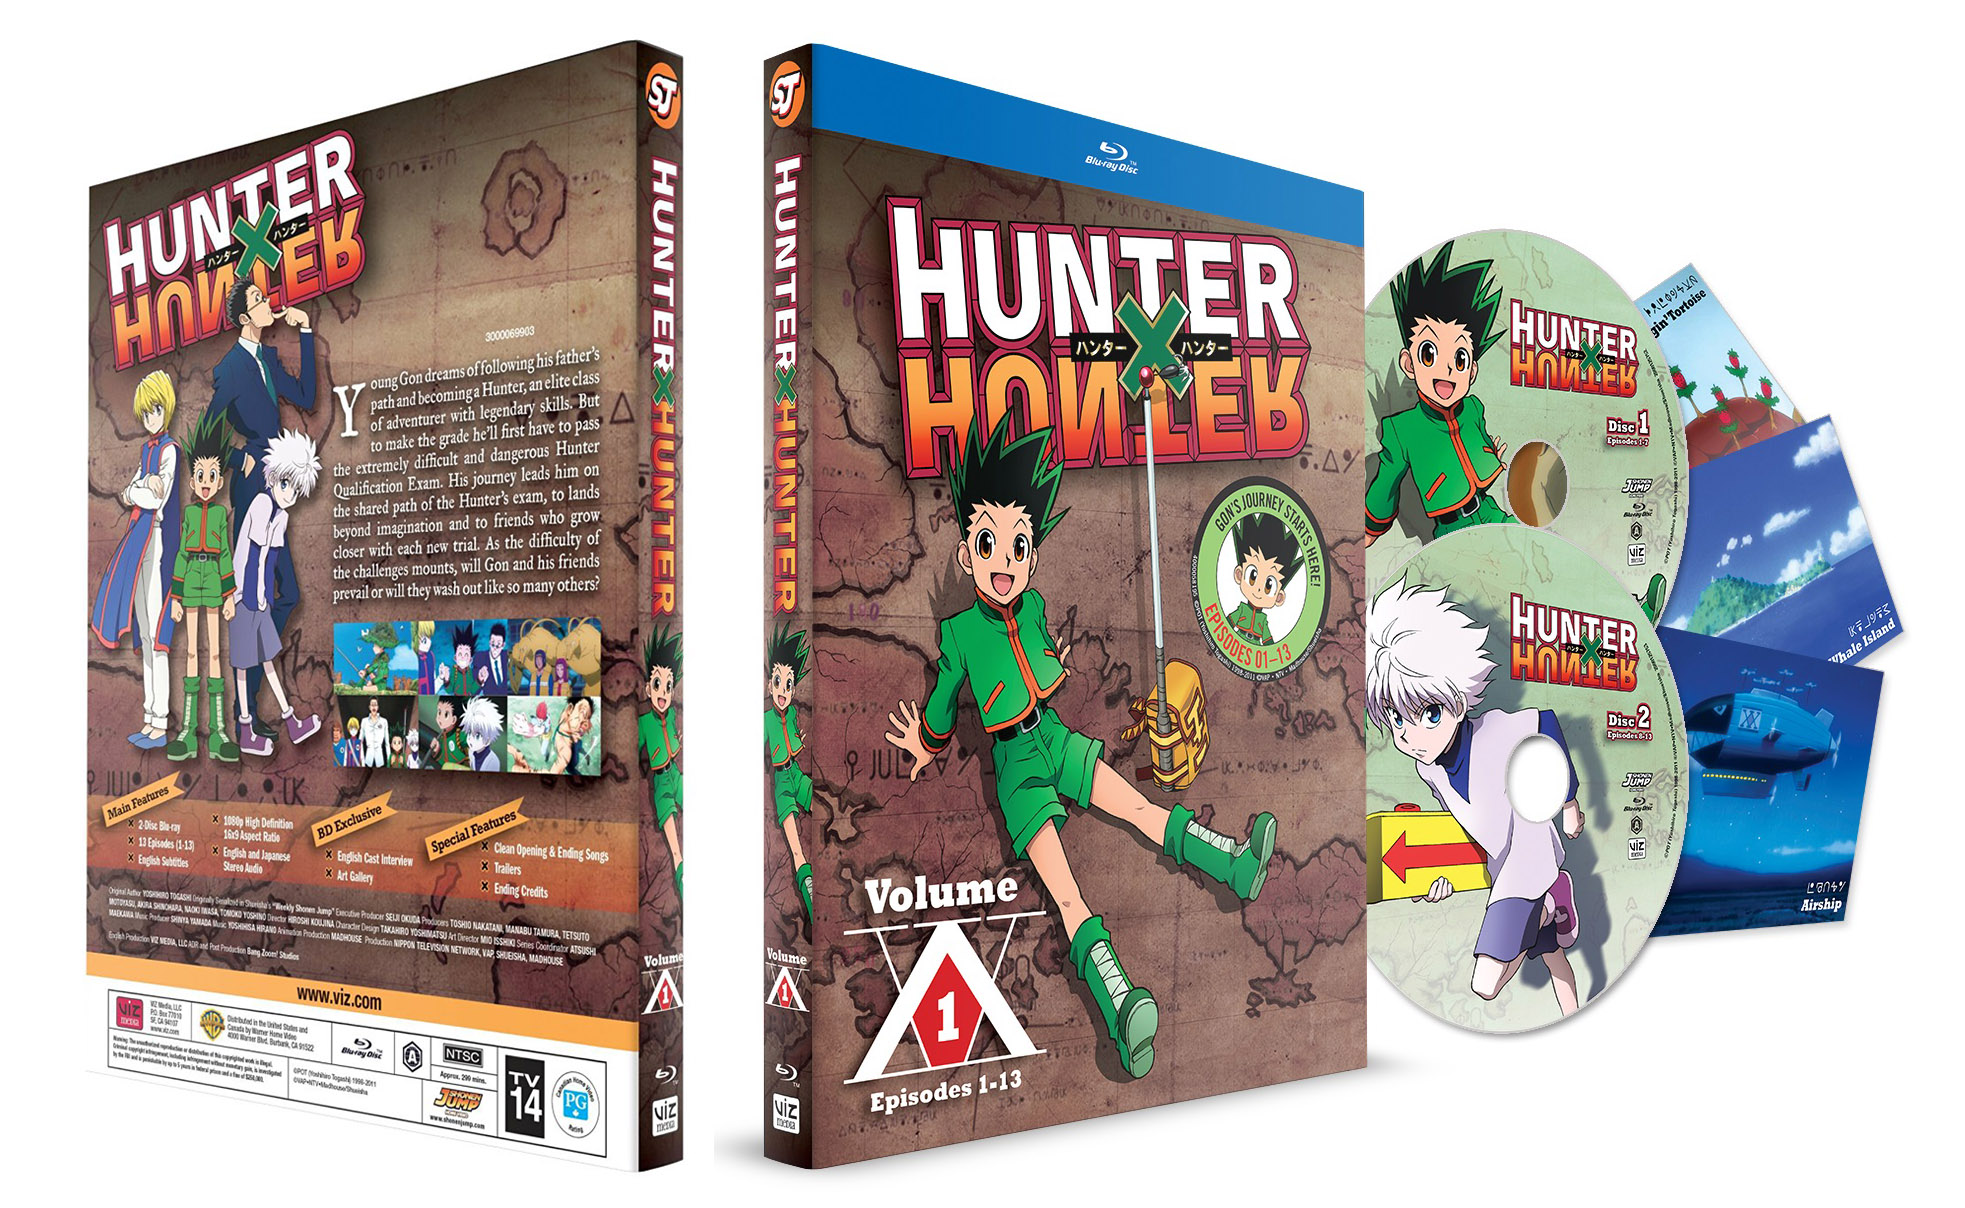 VIZ  See Hunter x Hunter, Set 3